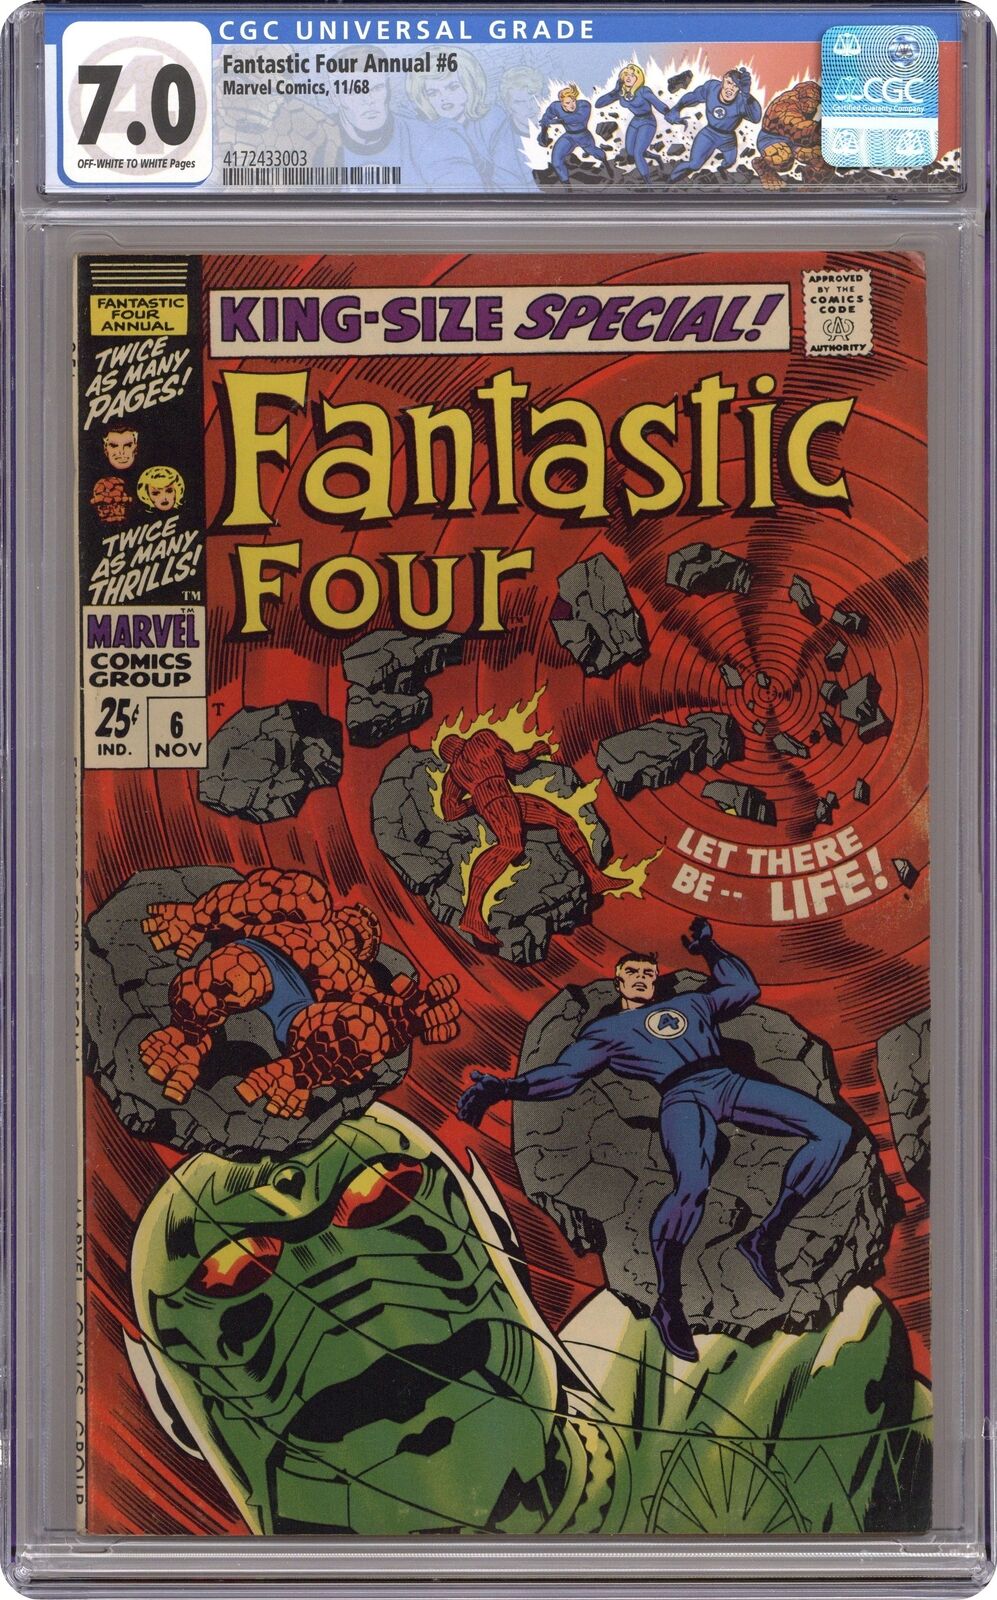 Fantastic Four Annual #6 CGC 7.0 1968 4172433003 1st app. Franklin Richards